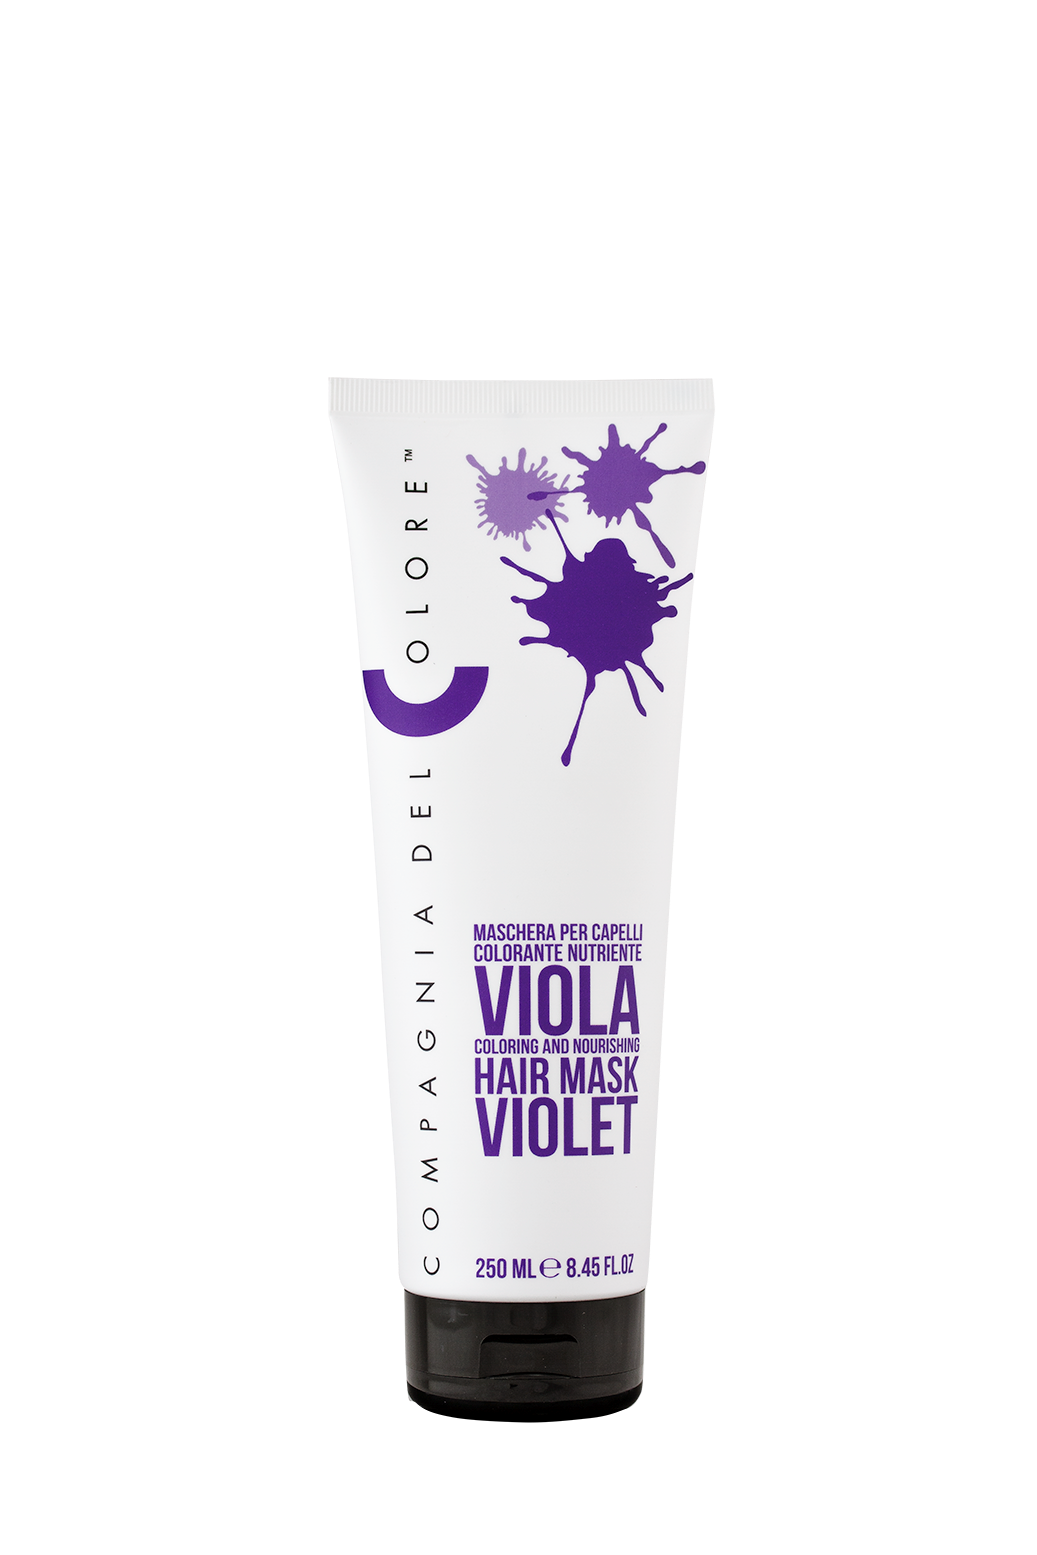 Viola Violet